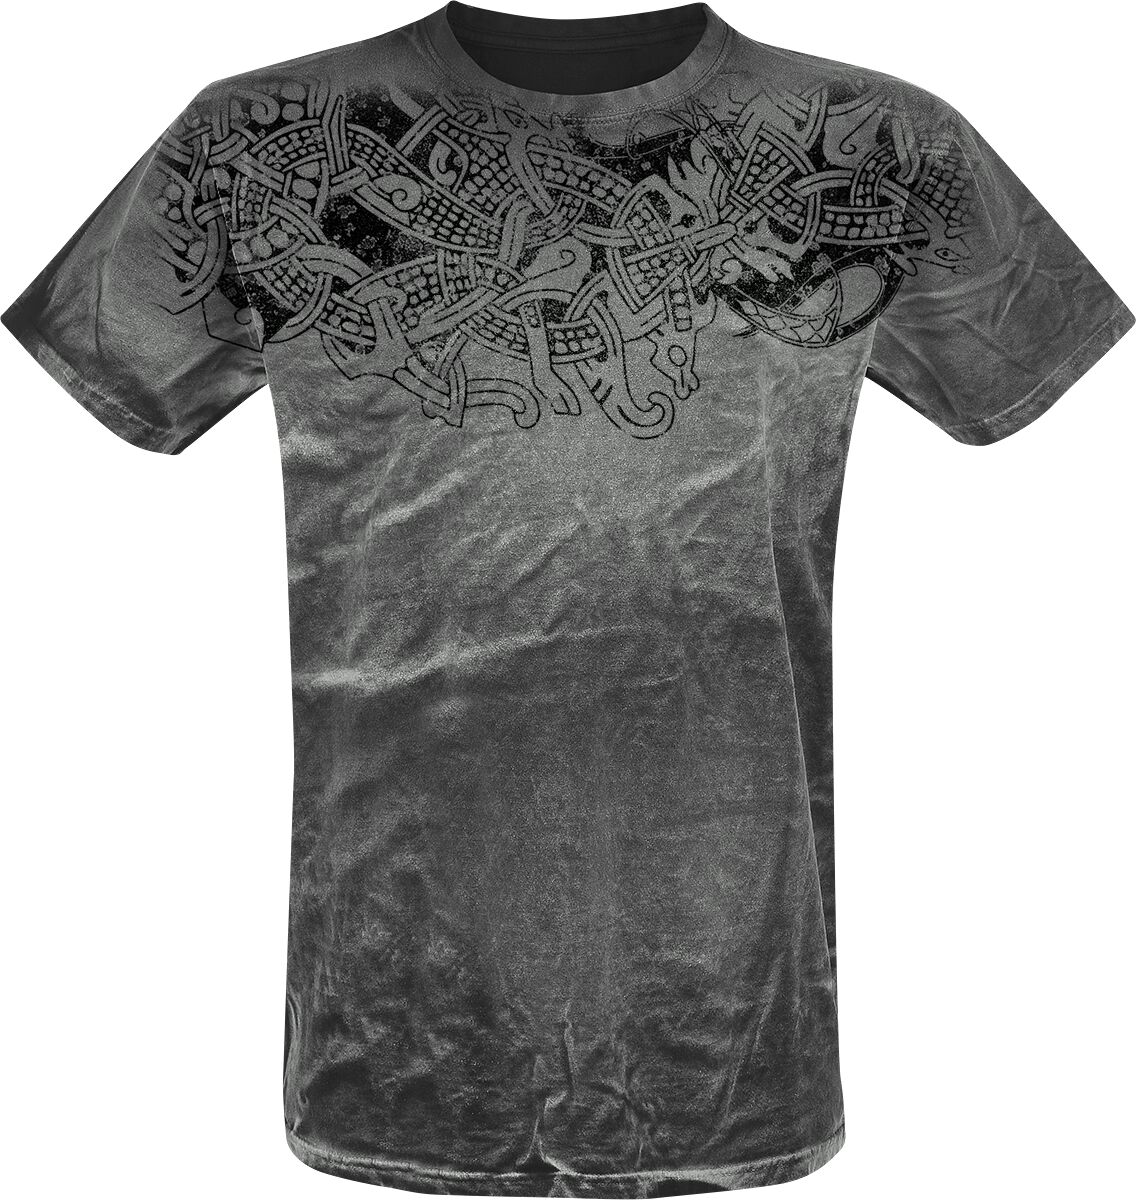 Outer Vision T-Shirt - Thunderstorm - S bis 3XL - für Männer - Größe M - grau